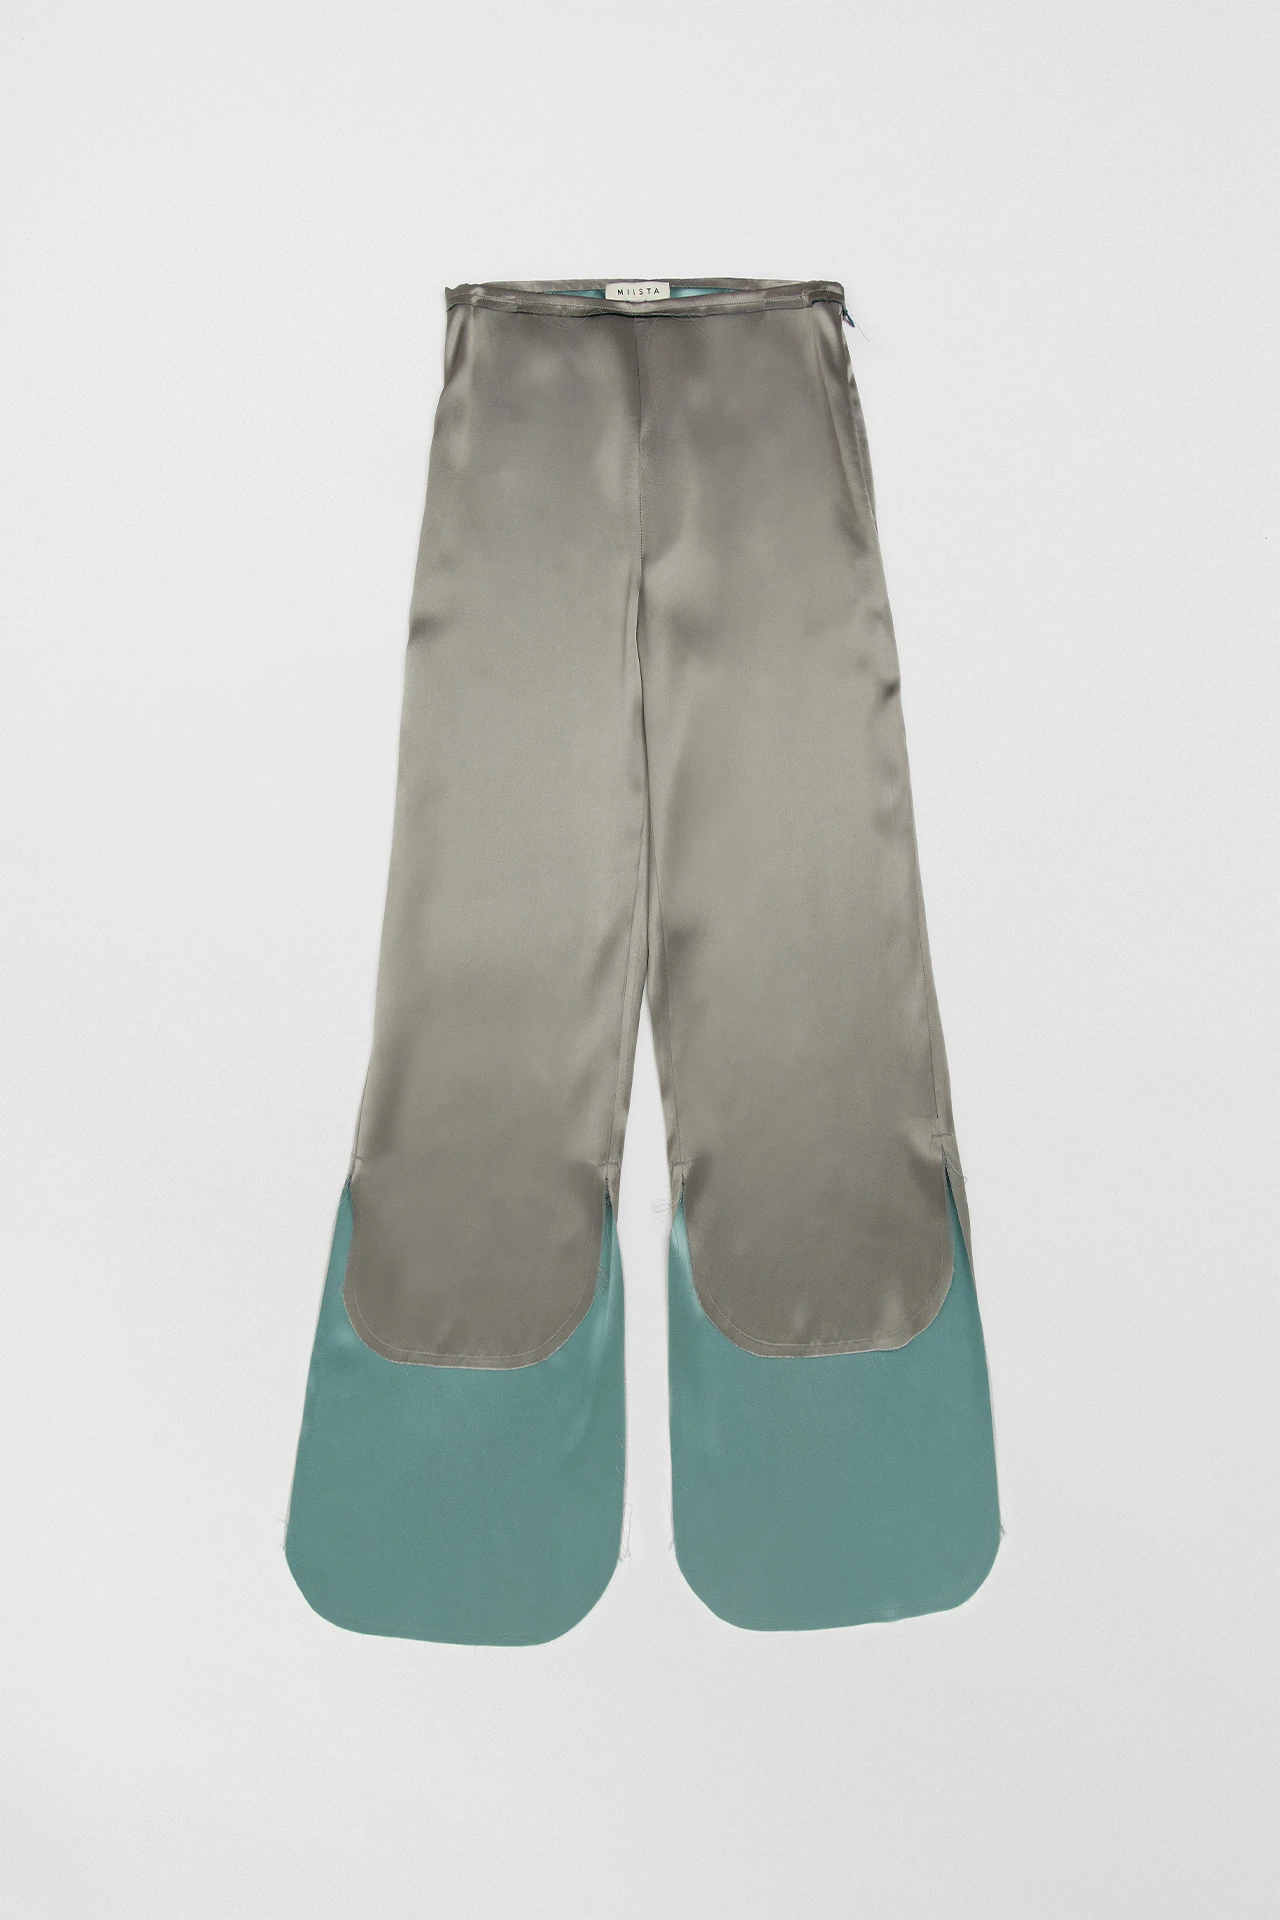 Miista-ball-grey-blue-trousers-01